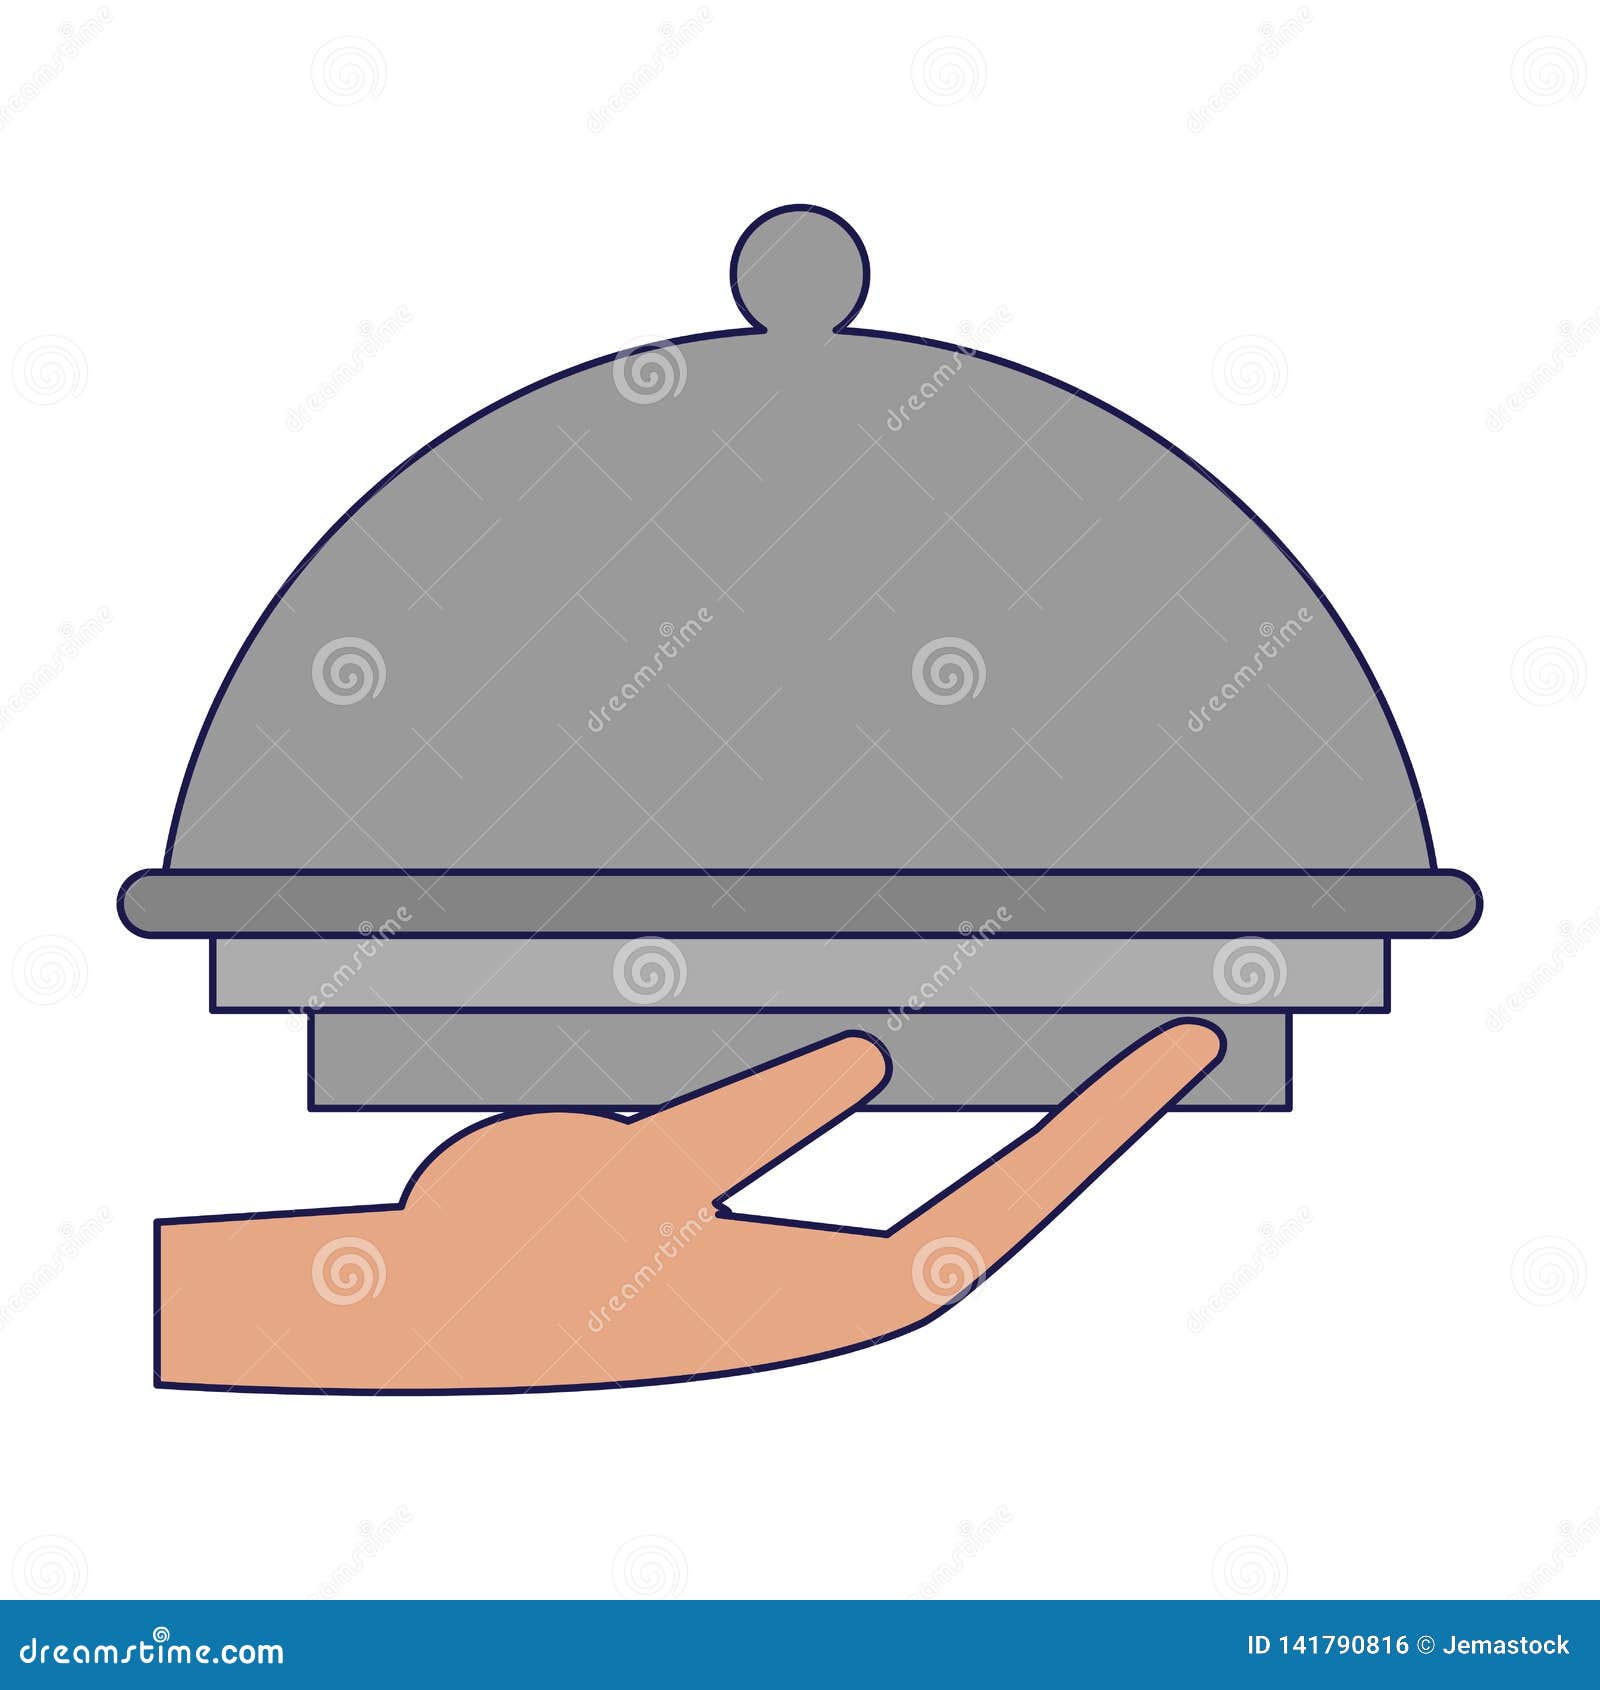 hand holding restaurante bell dome